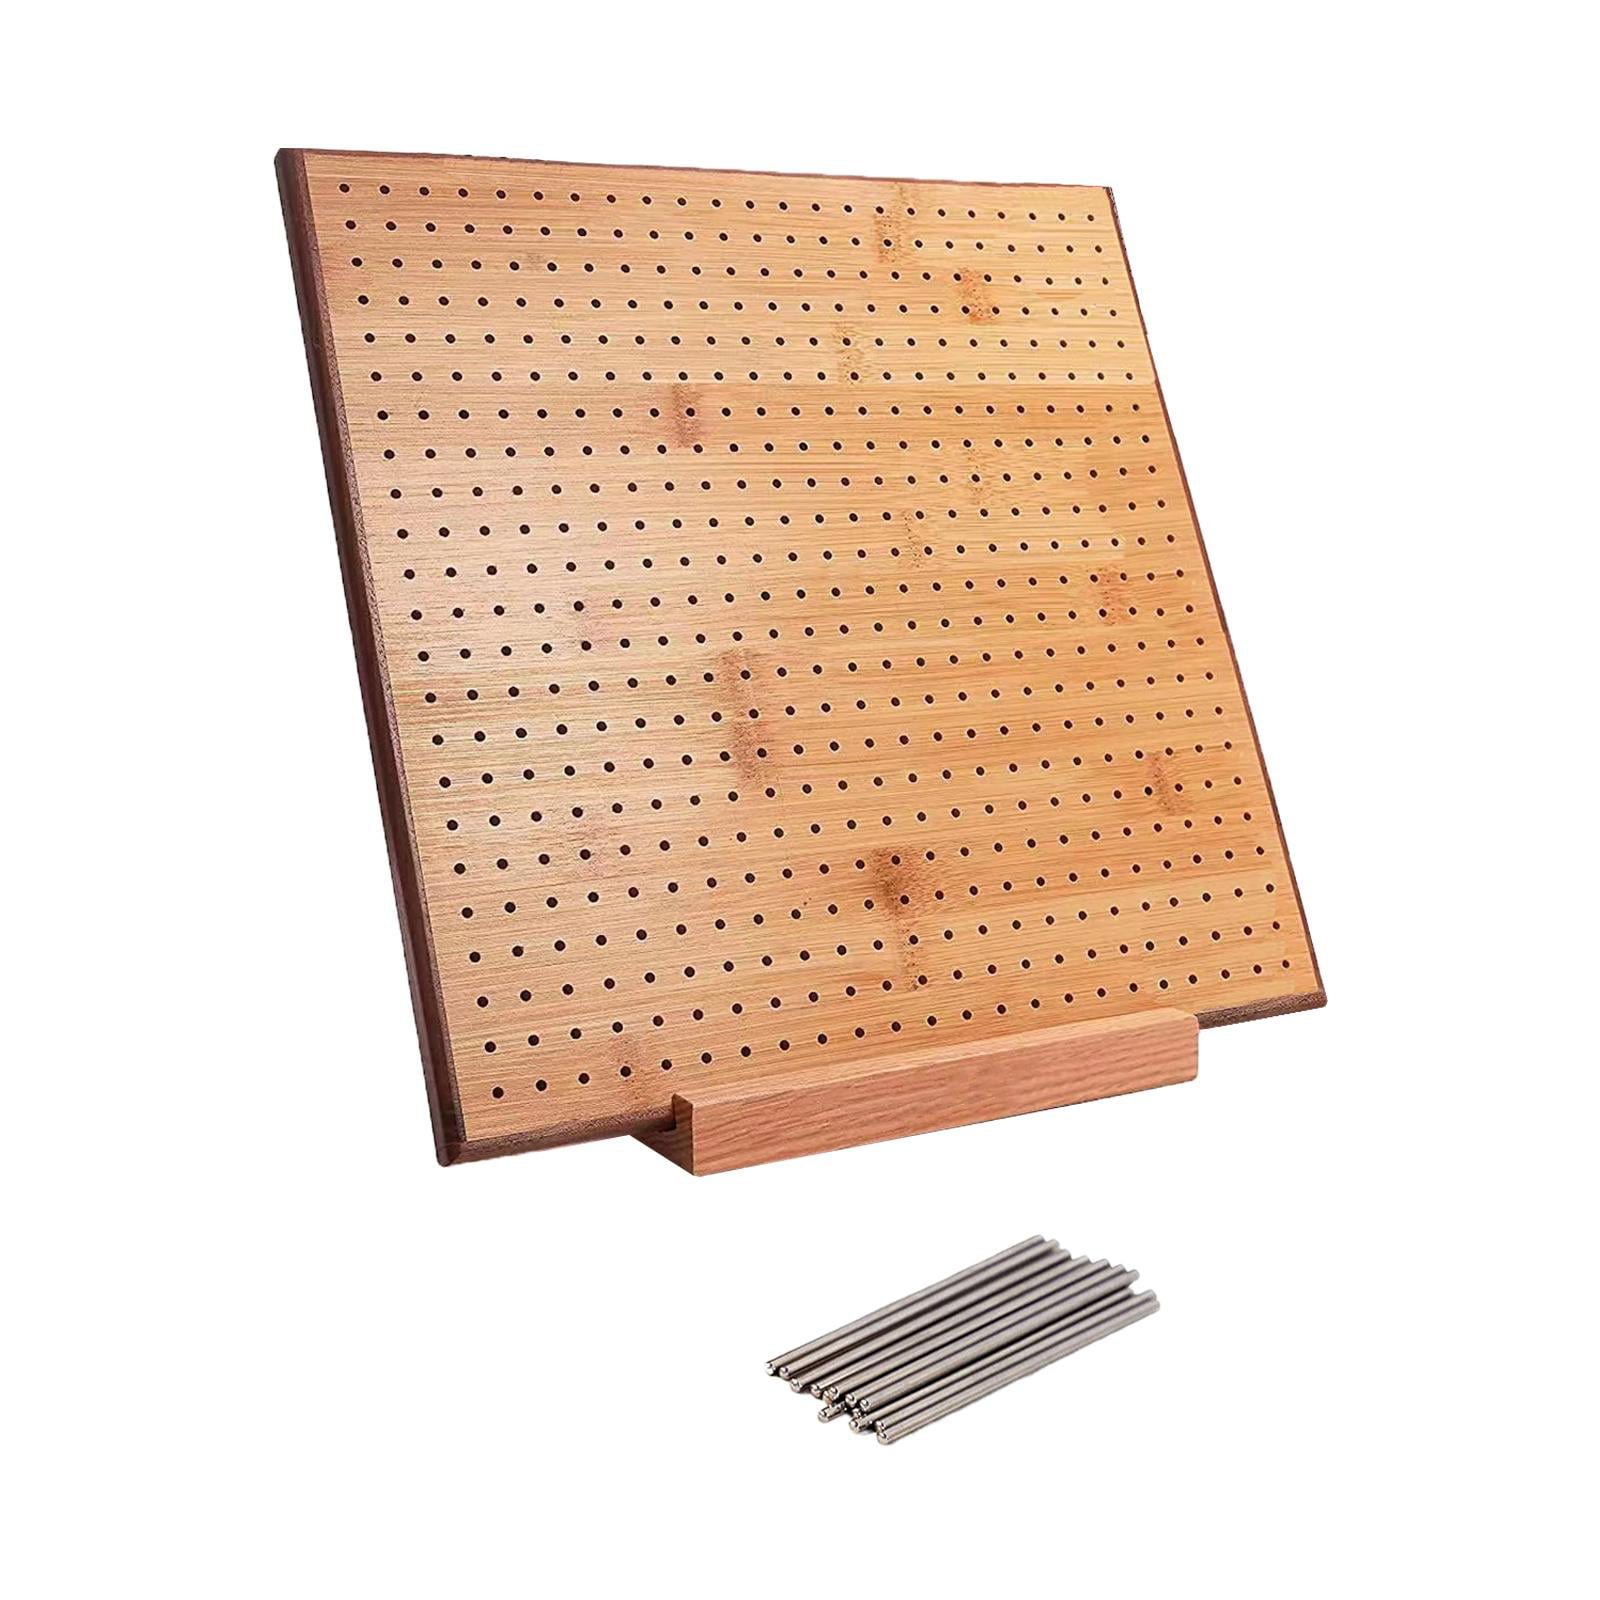 MILWARDS Blocking Board with 12 Pins, 30x30x12cm, Wood